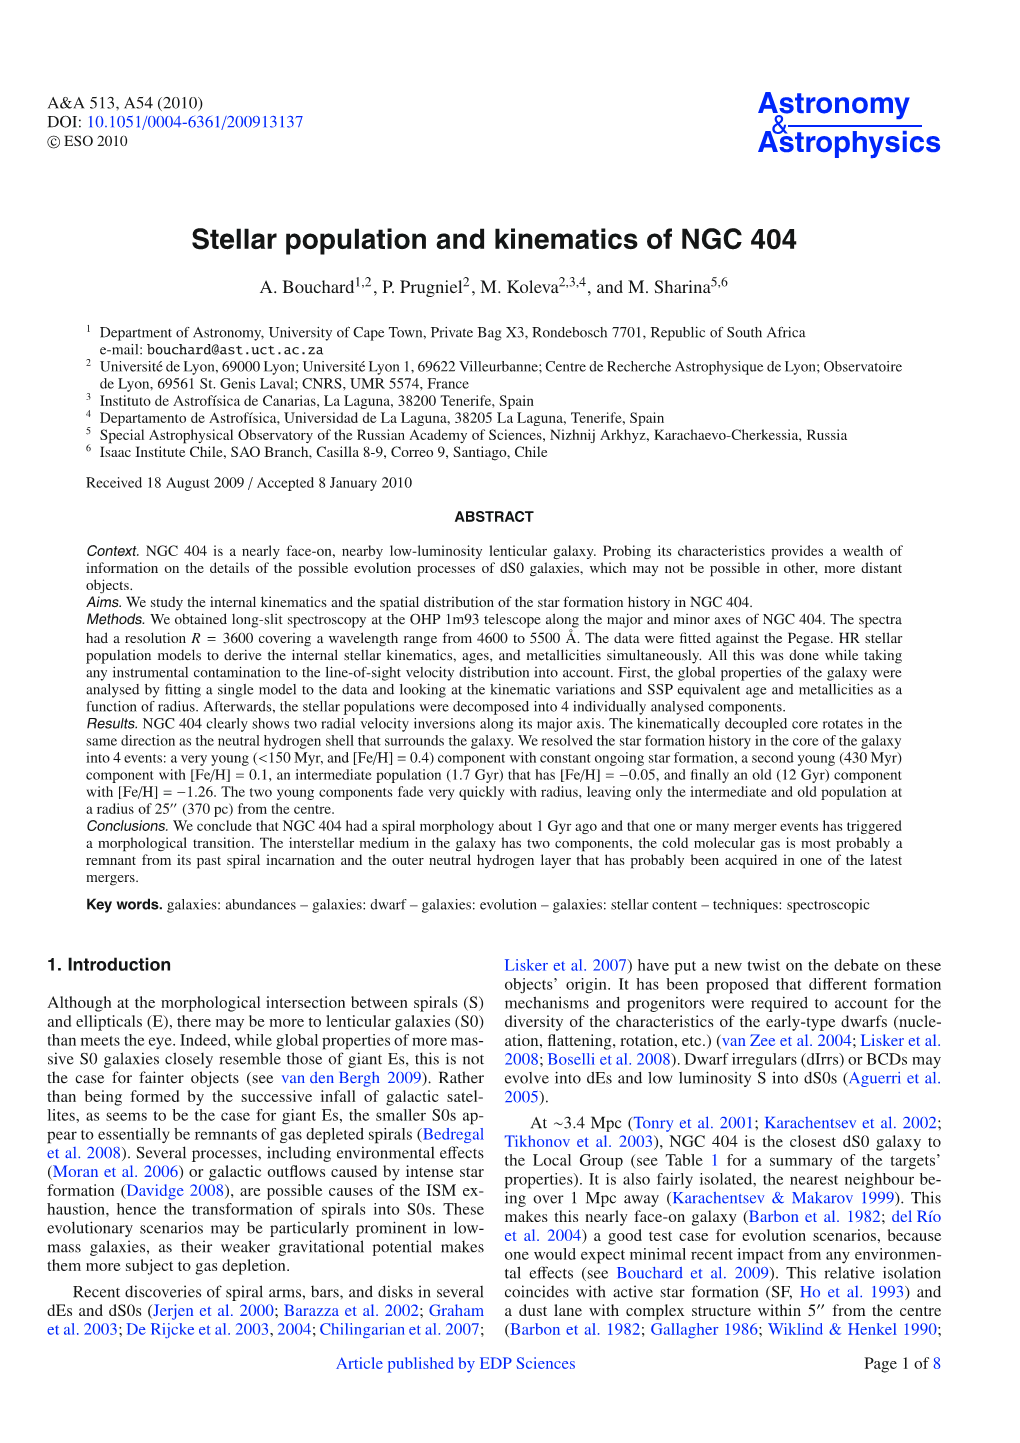 Stellar Population and Kinematics of NGC 404